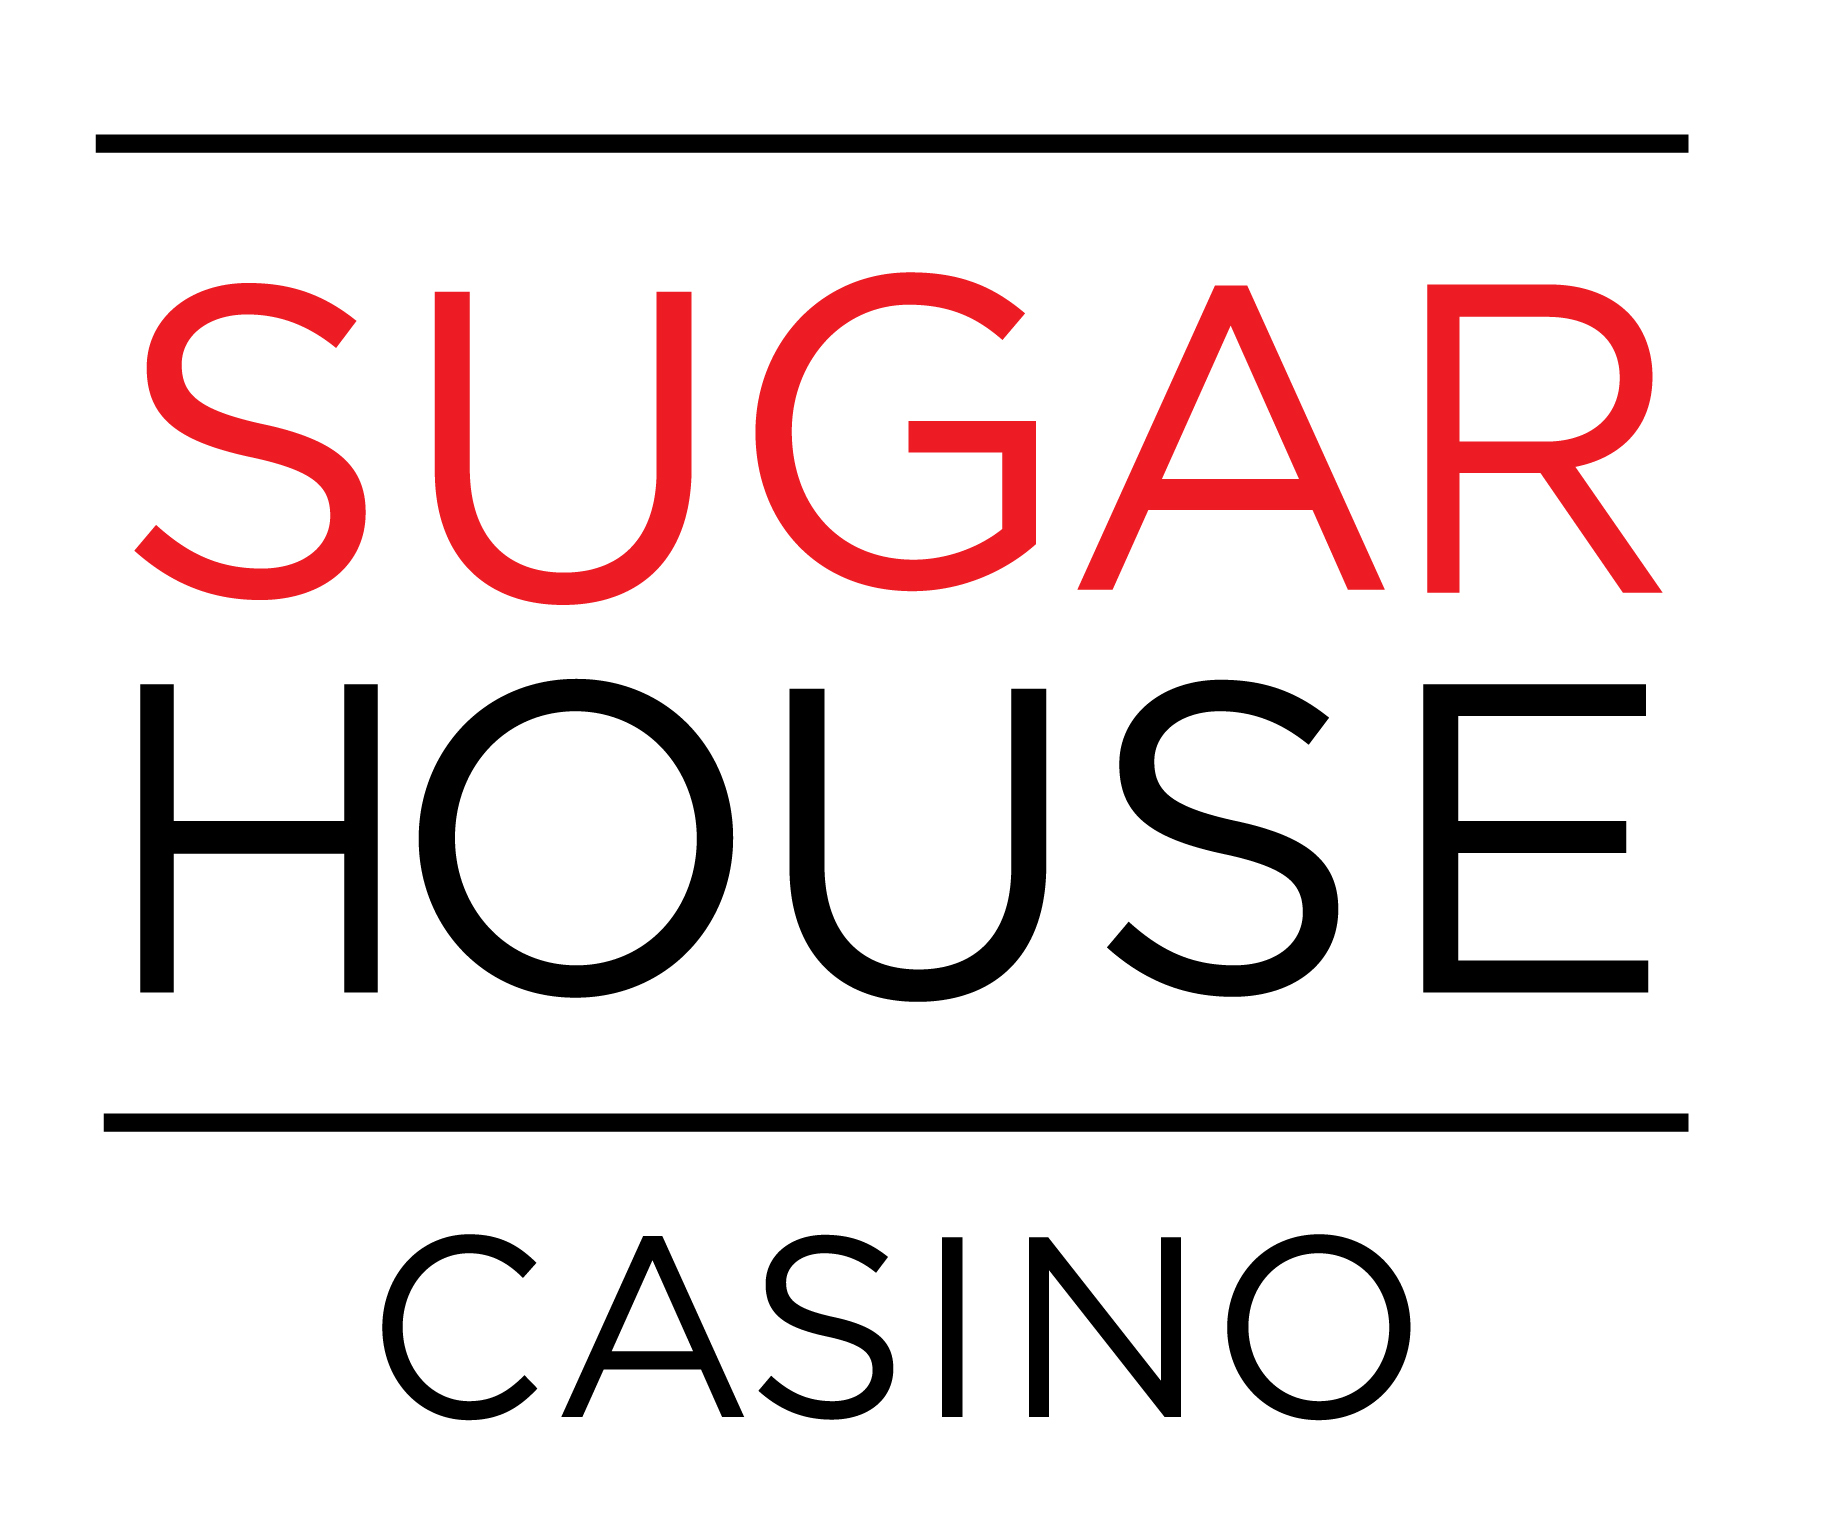 sugar house casino